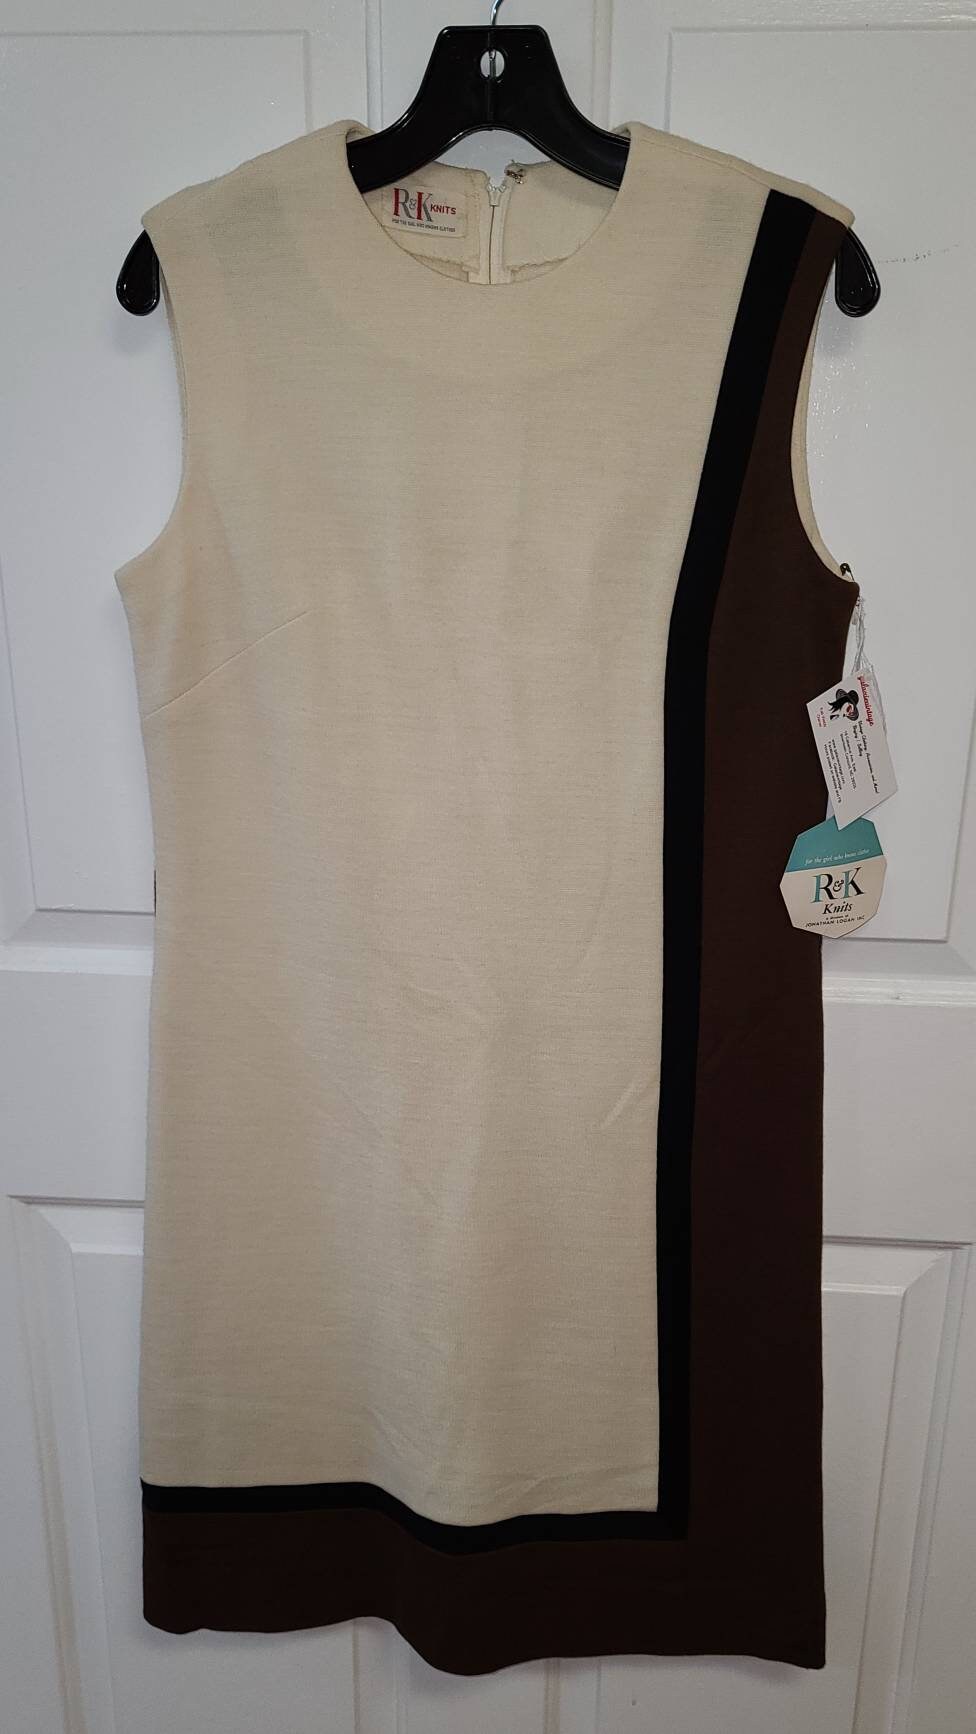 SALE Unworn Vintage 1960s Dress Geometric Wool Blend Sheath Dress Cream Brown Black NWT Mod Op Art M L chest hips 39 in.